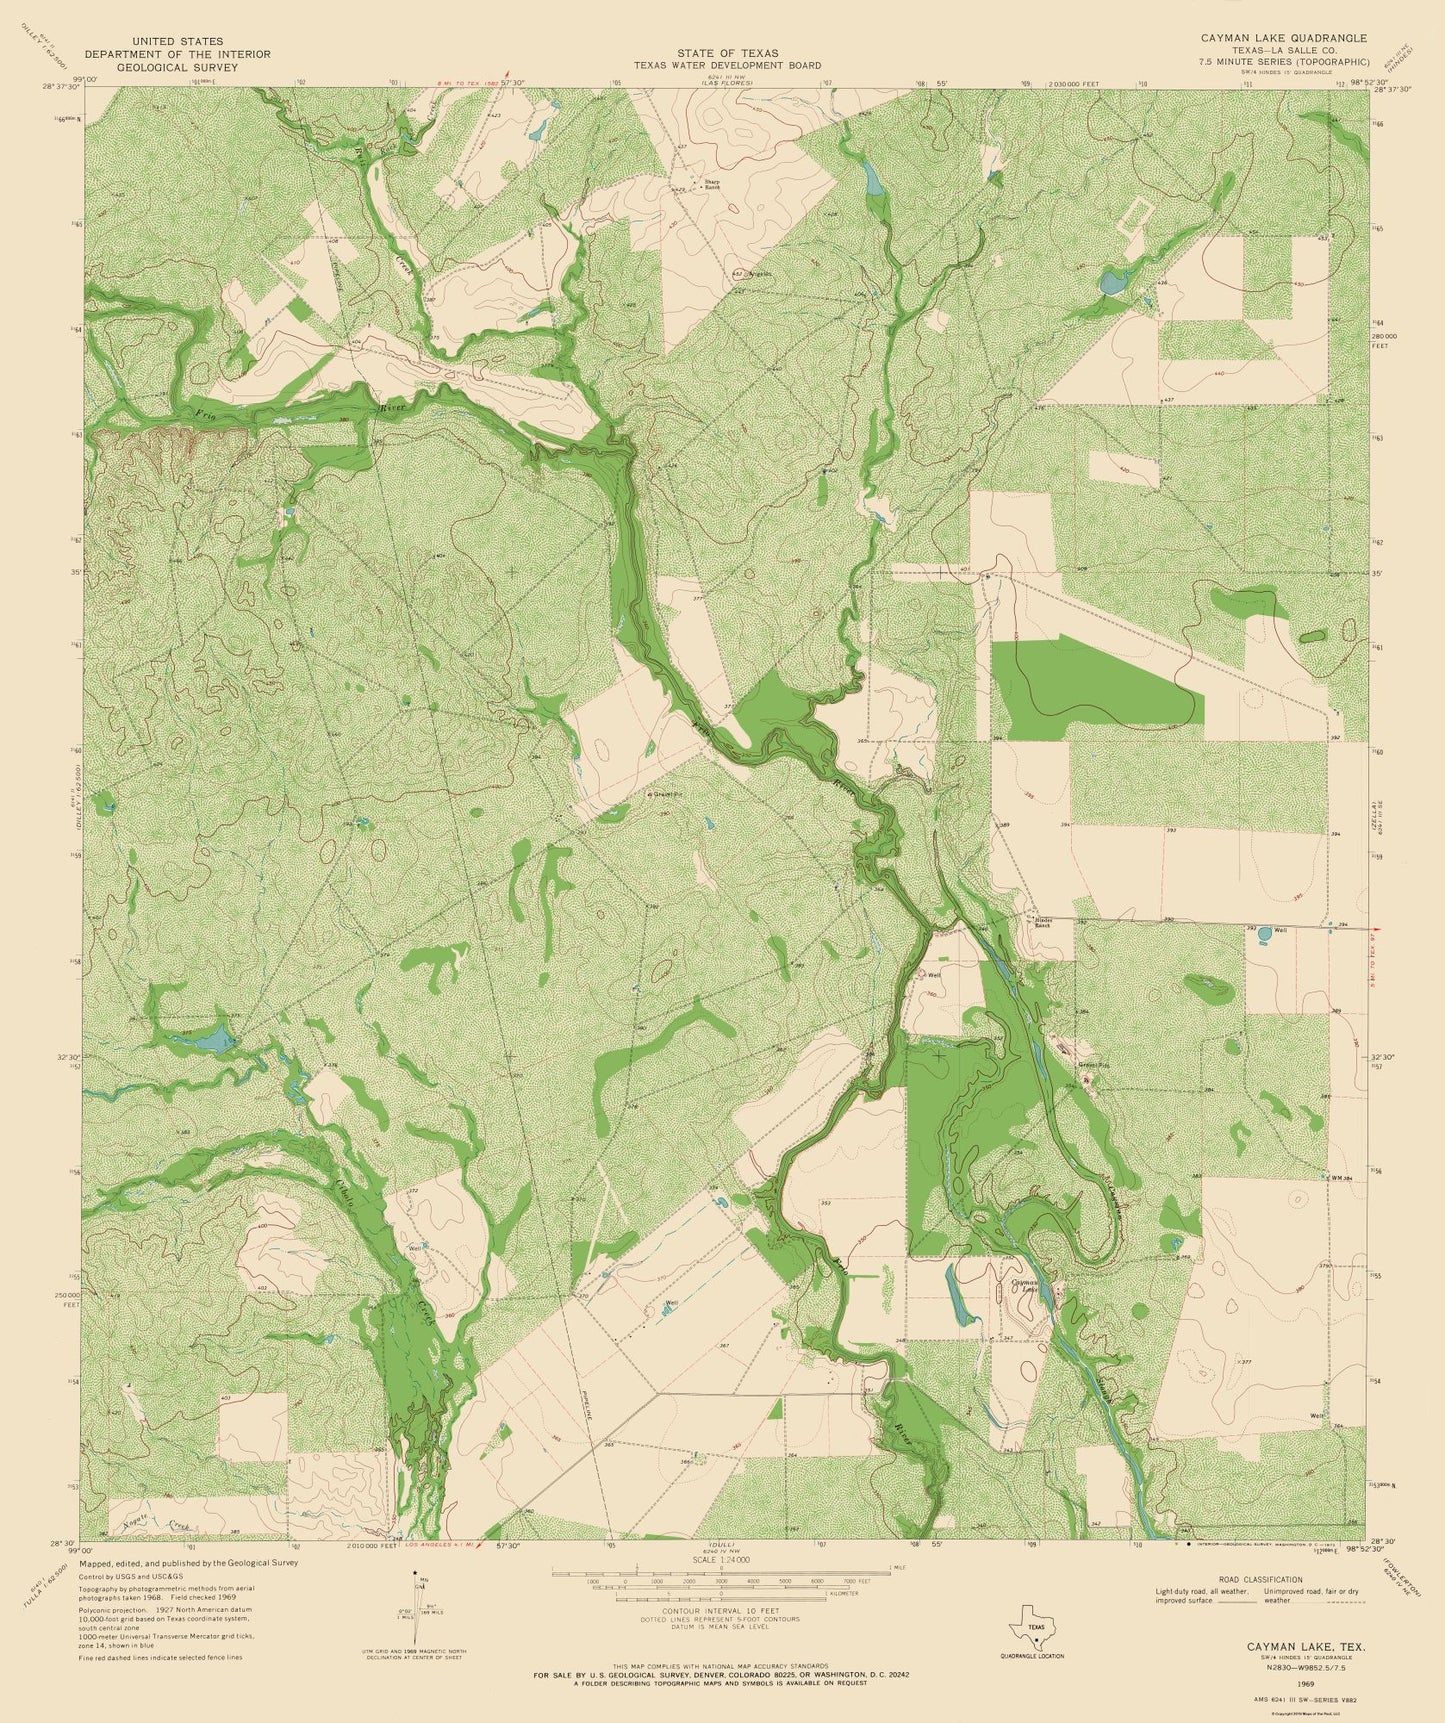 Topographical Map - Cayman Lake Texas Quad - USGS 1969 - 23 x 27.44 - Vintage Wall Art